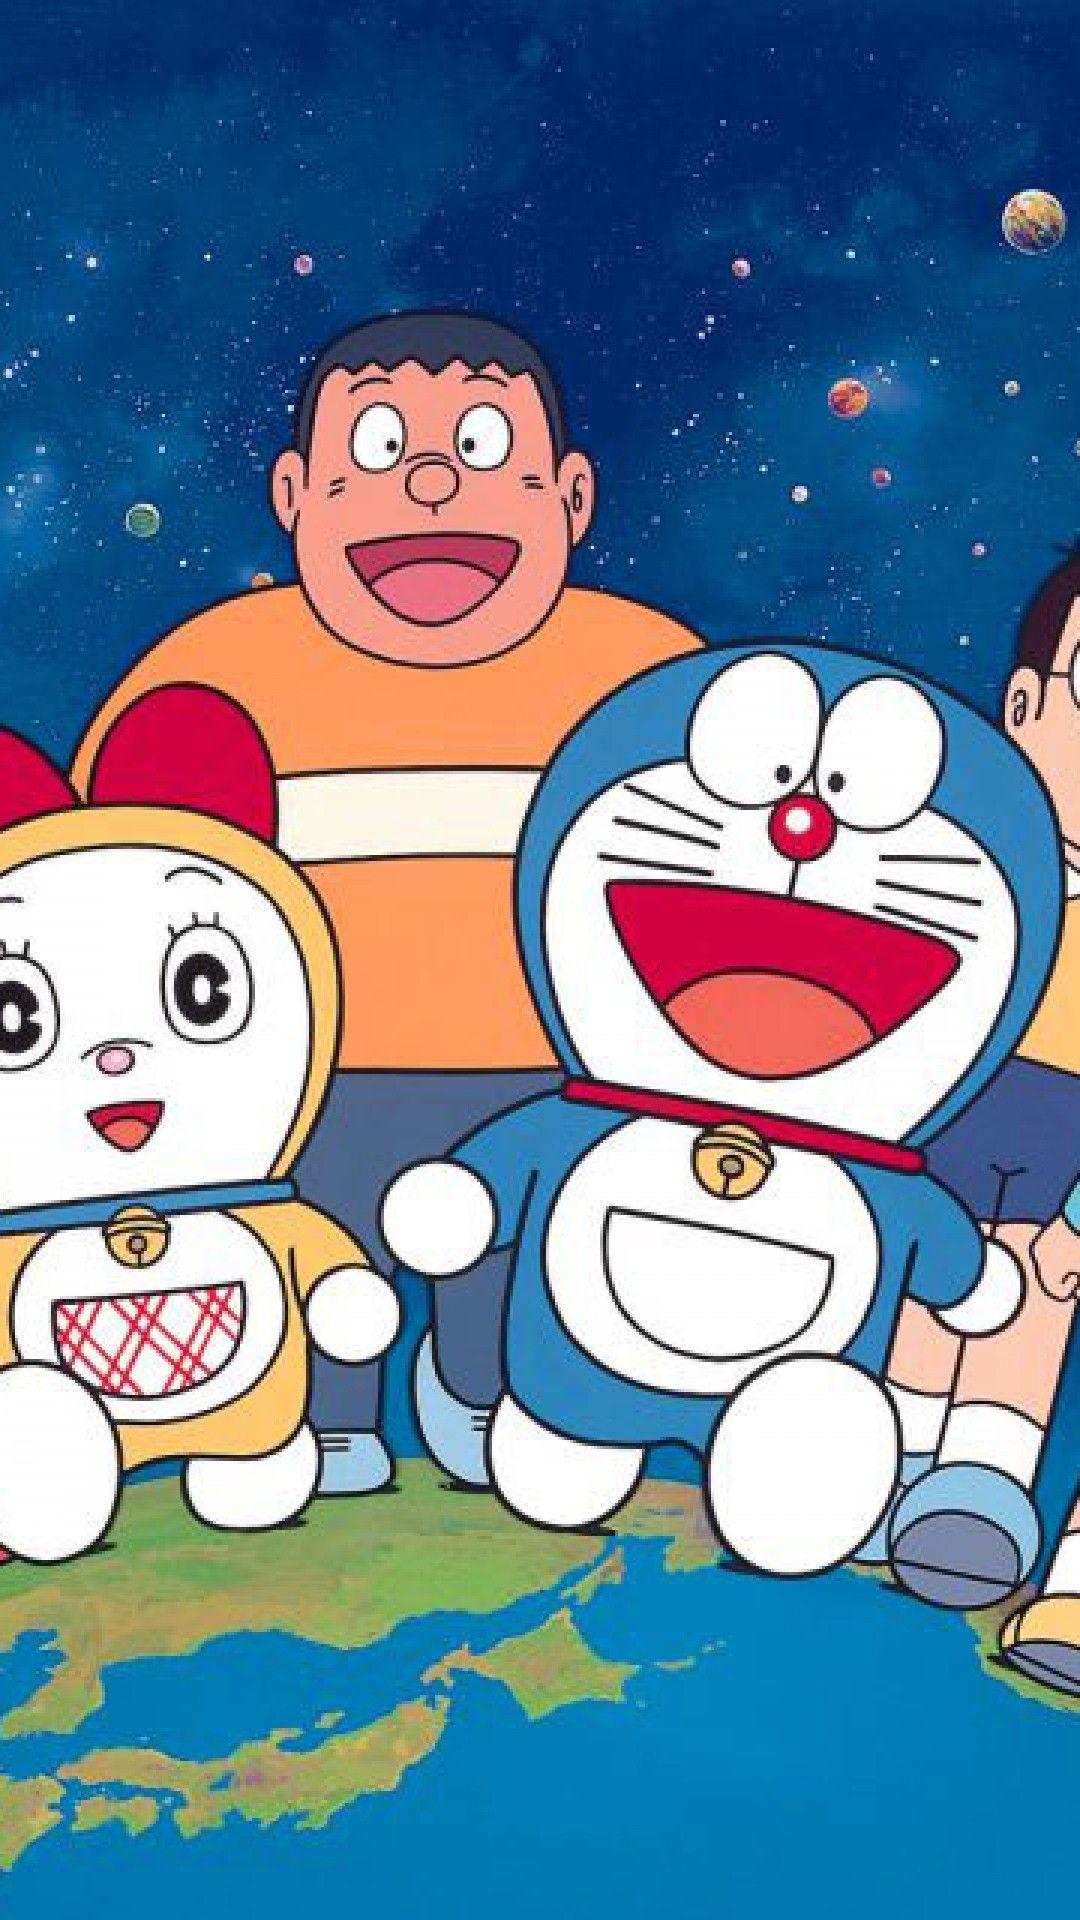 Download 870+ Wallpaper Doraemon Android Paling Keren ...